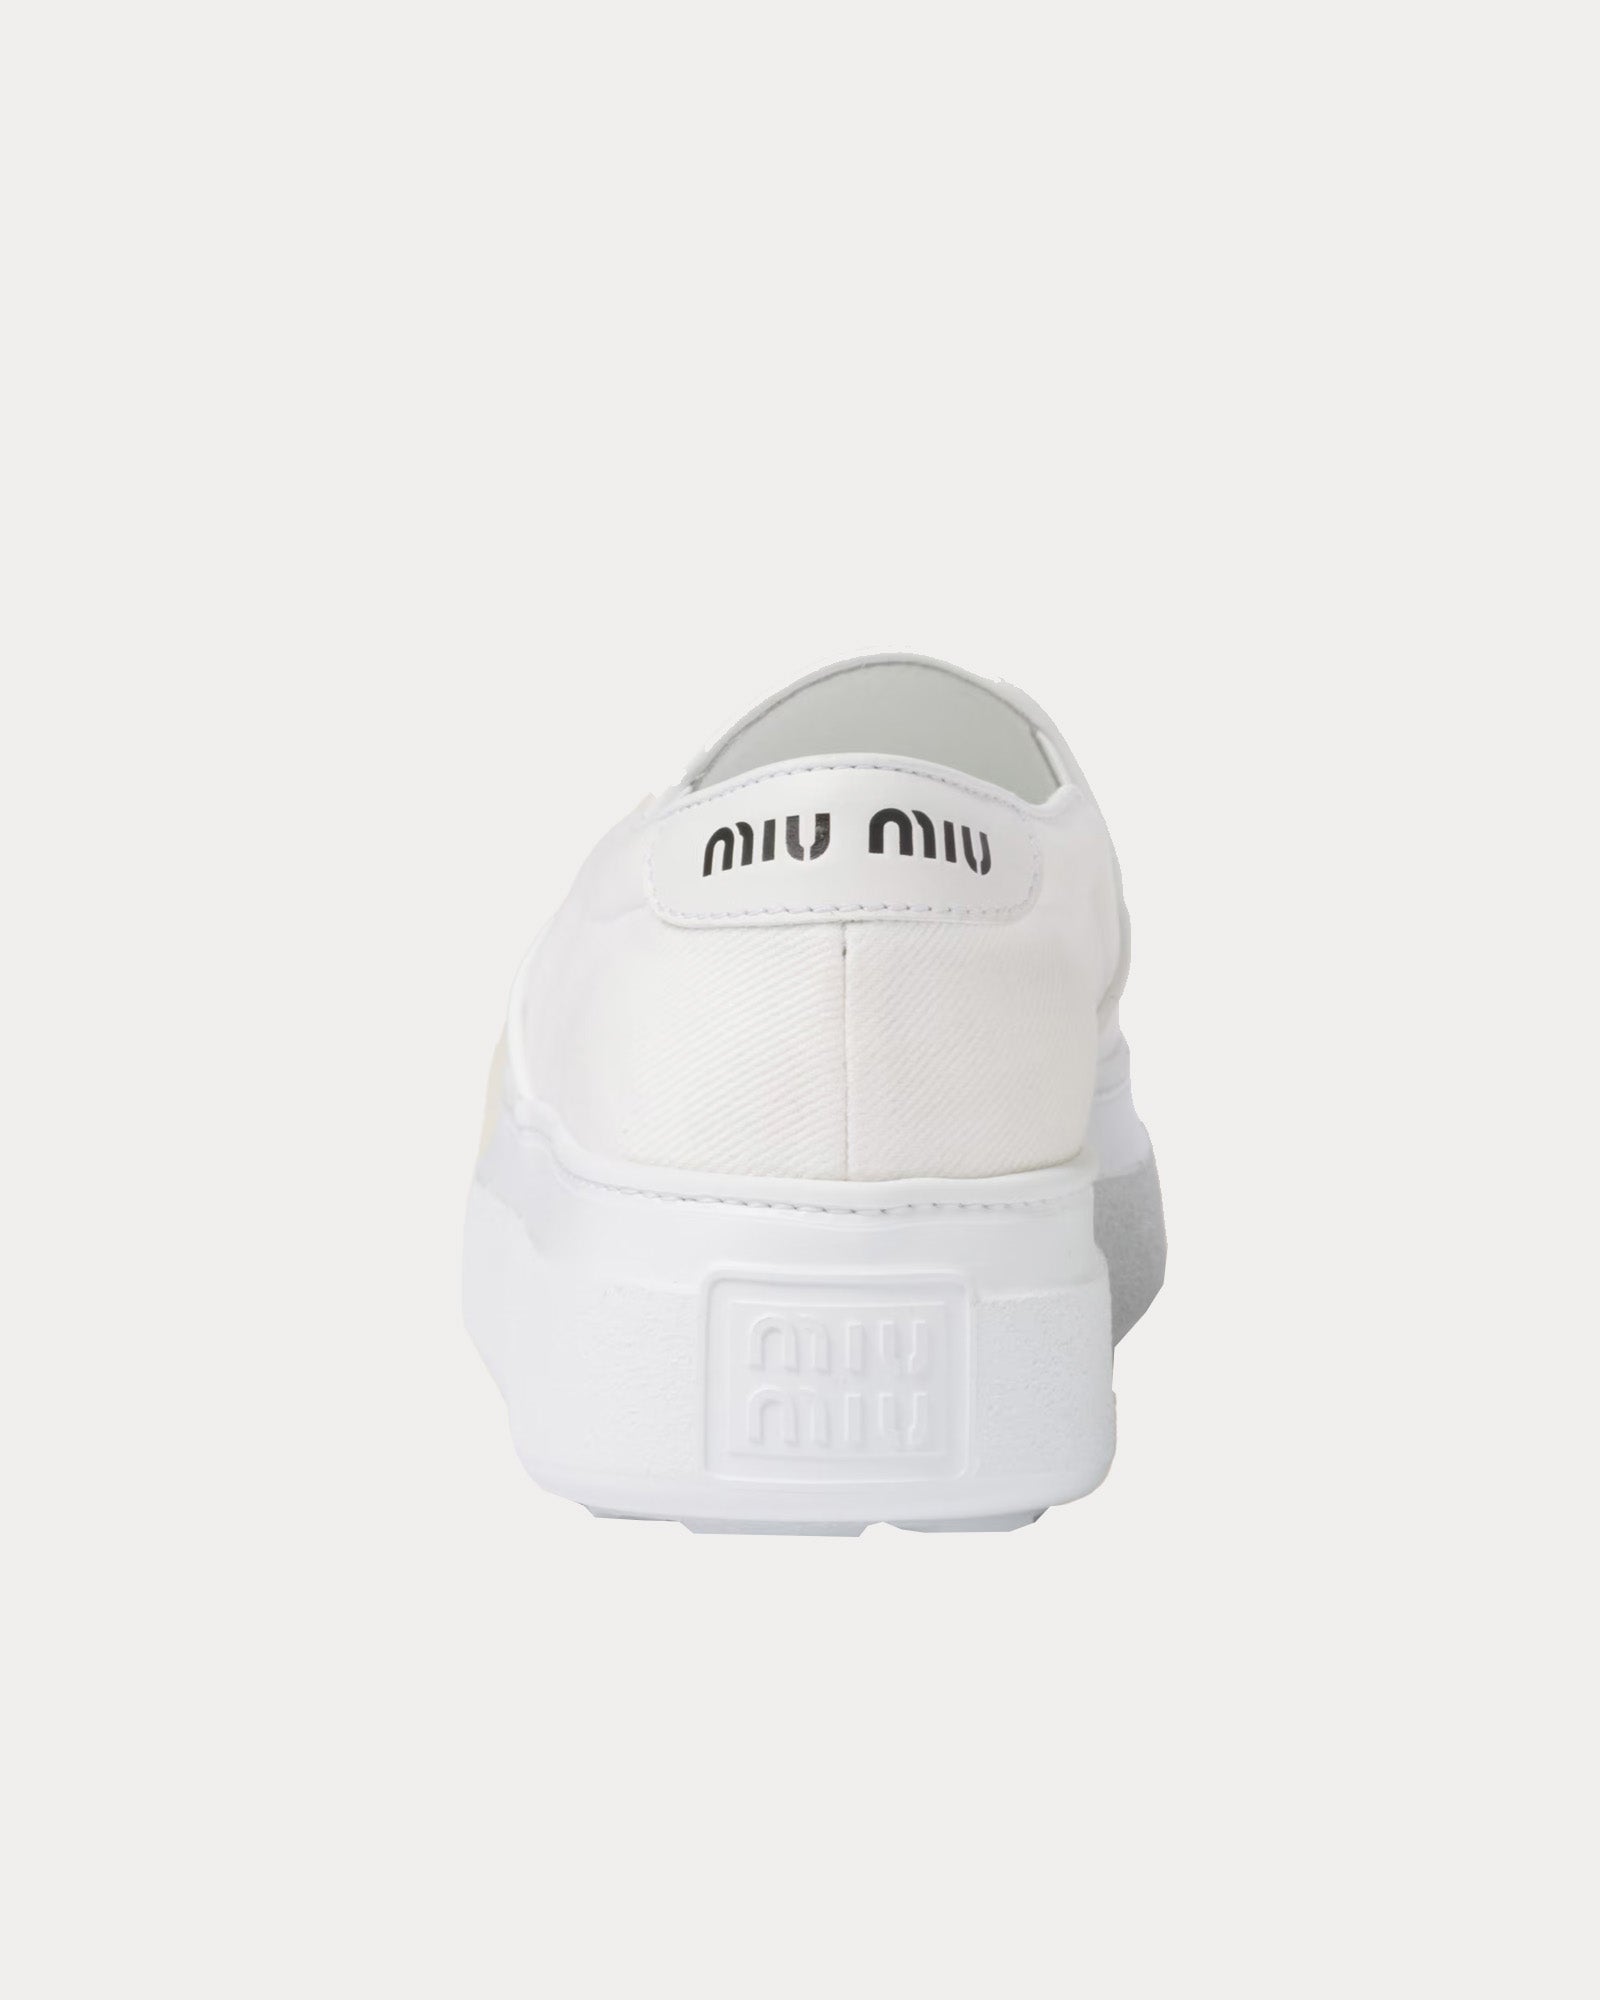 Miu Miu - Washed Cotton Drill White Slip On Sneakers